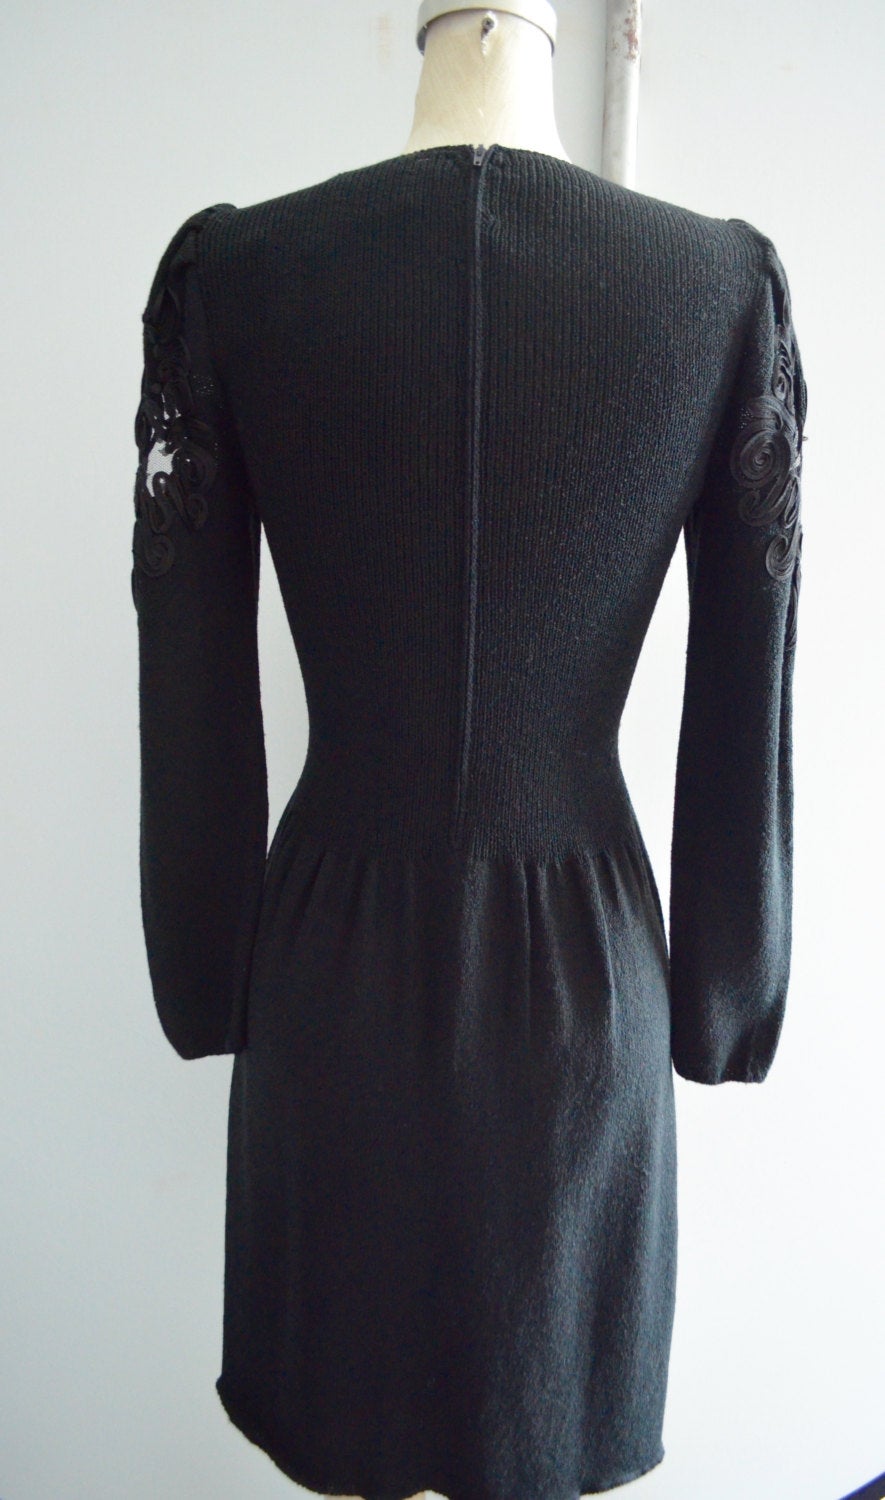 Pat Sandler Wellmore Dress For Saks Fifth Avenue Black Santana Knit Bead Puff Sleeve Dynasty